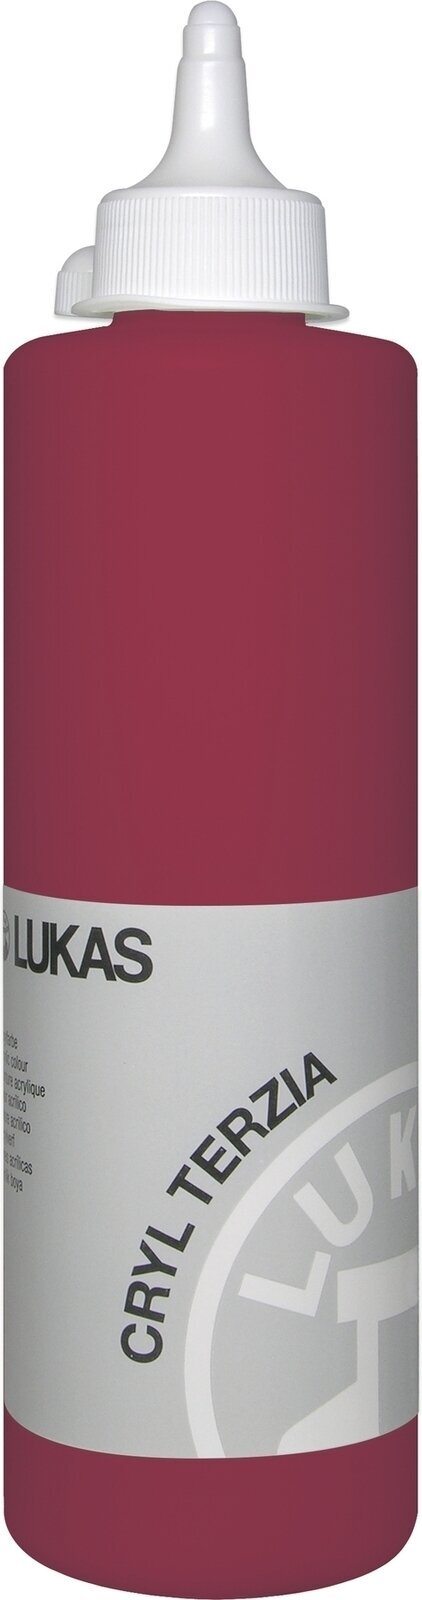 Akrylová farba Lukas Cryl Terzia Acrylic Paint Plastic Bottle Akrylová farba Alizarin Crimson 500 ml 1 ks